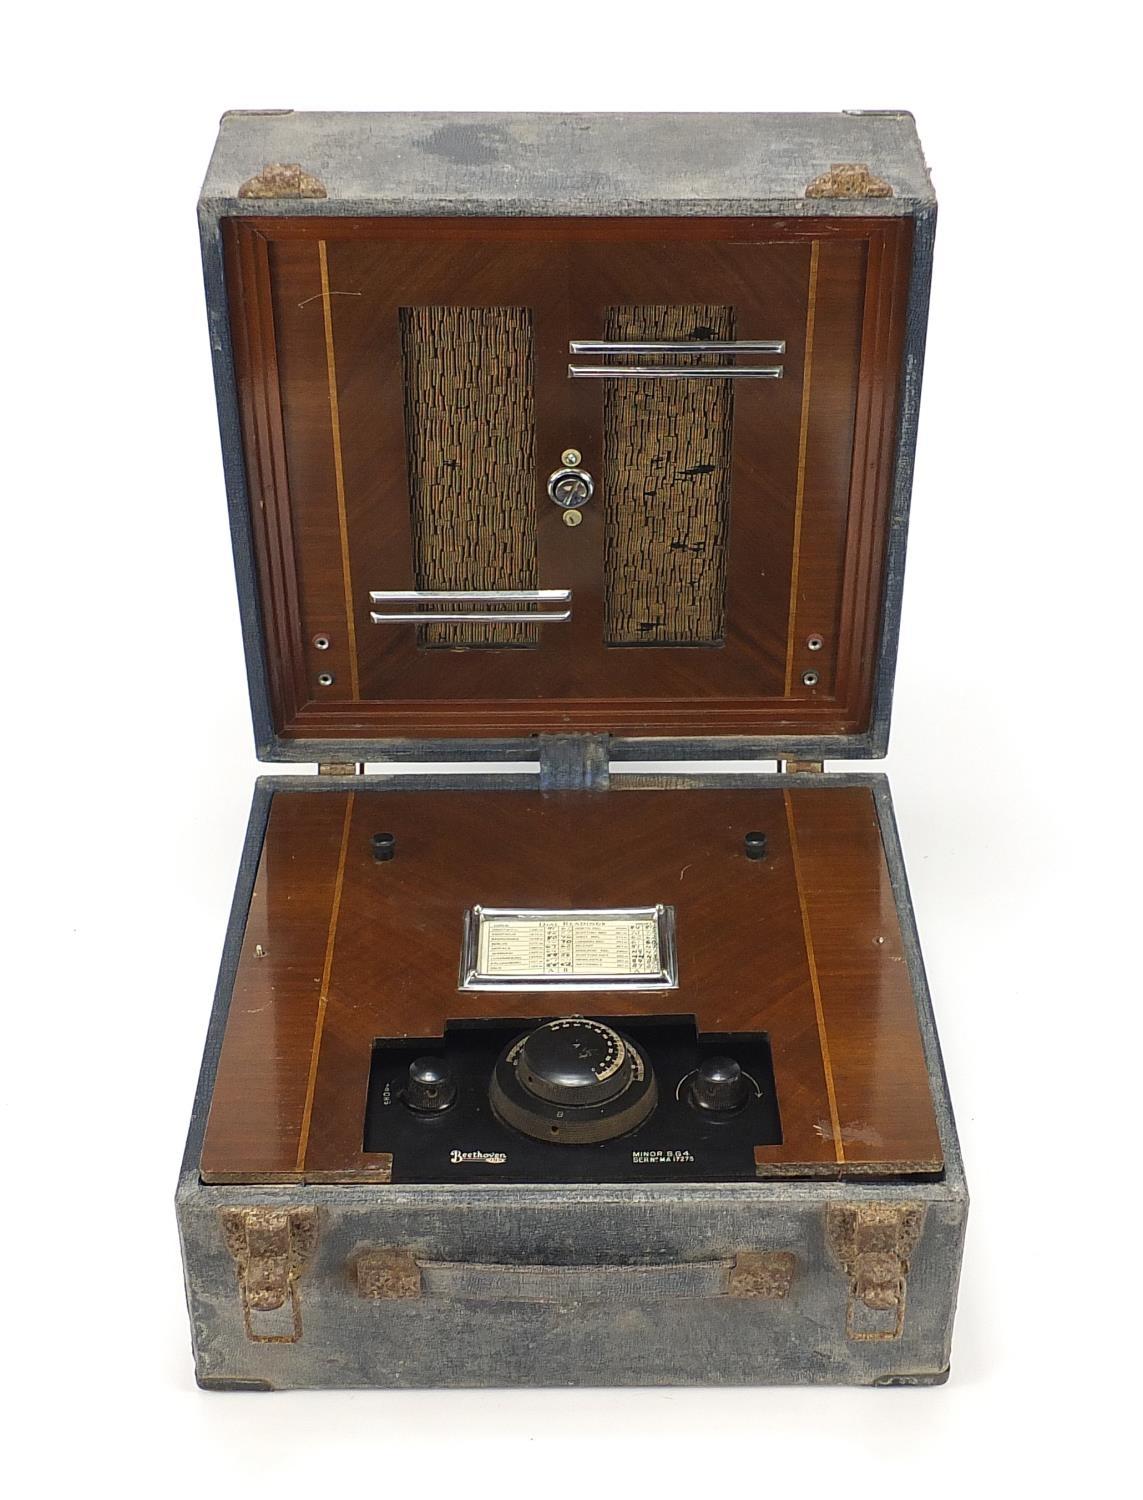 Vintage Beethoven radio with original Vidor battery, 23.5cm H x 35cm W x 33cm D - Image 2 of 7